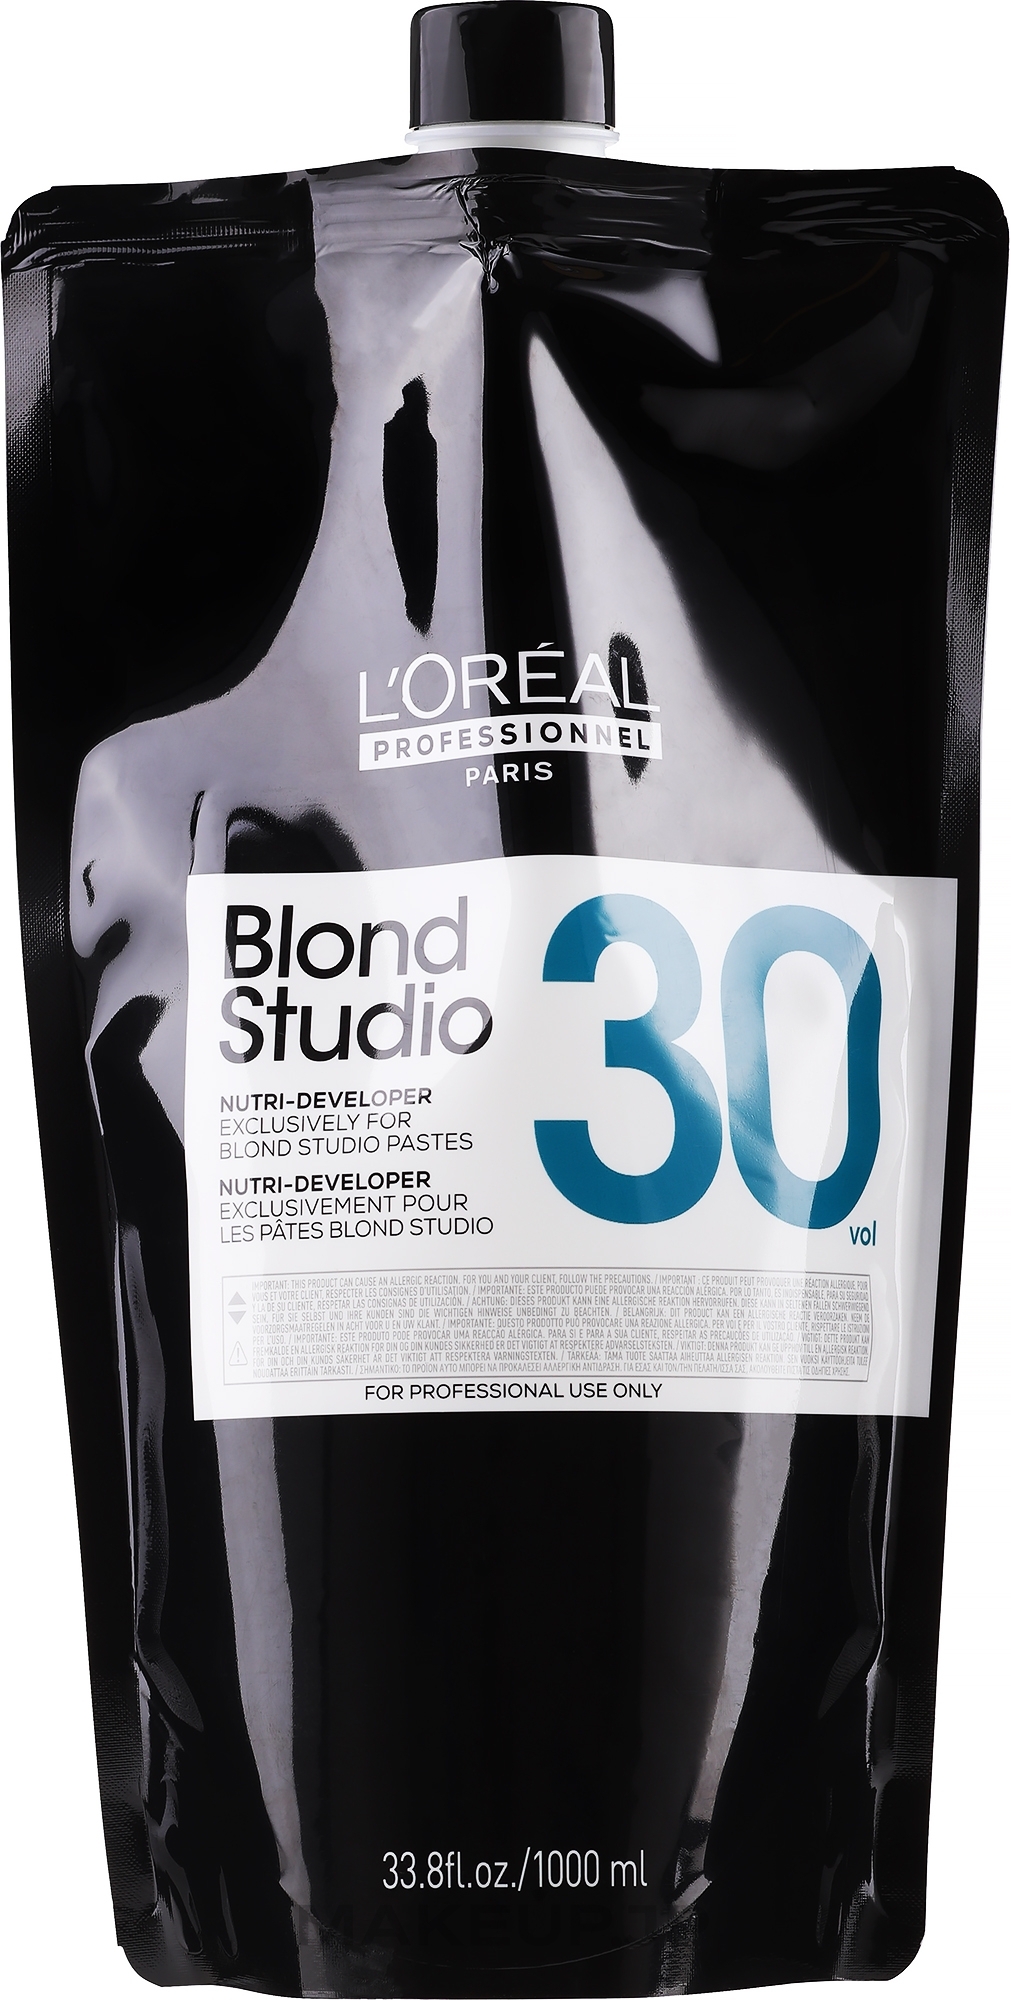 Nourishing Creamy Developer for Blonde Hair 9% - L'Oreal Professionnel Blond Studio Creamy Nutri-Developer Vol.30 — photo 1000 ml